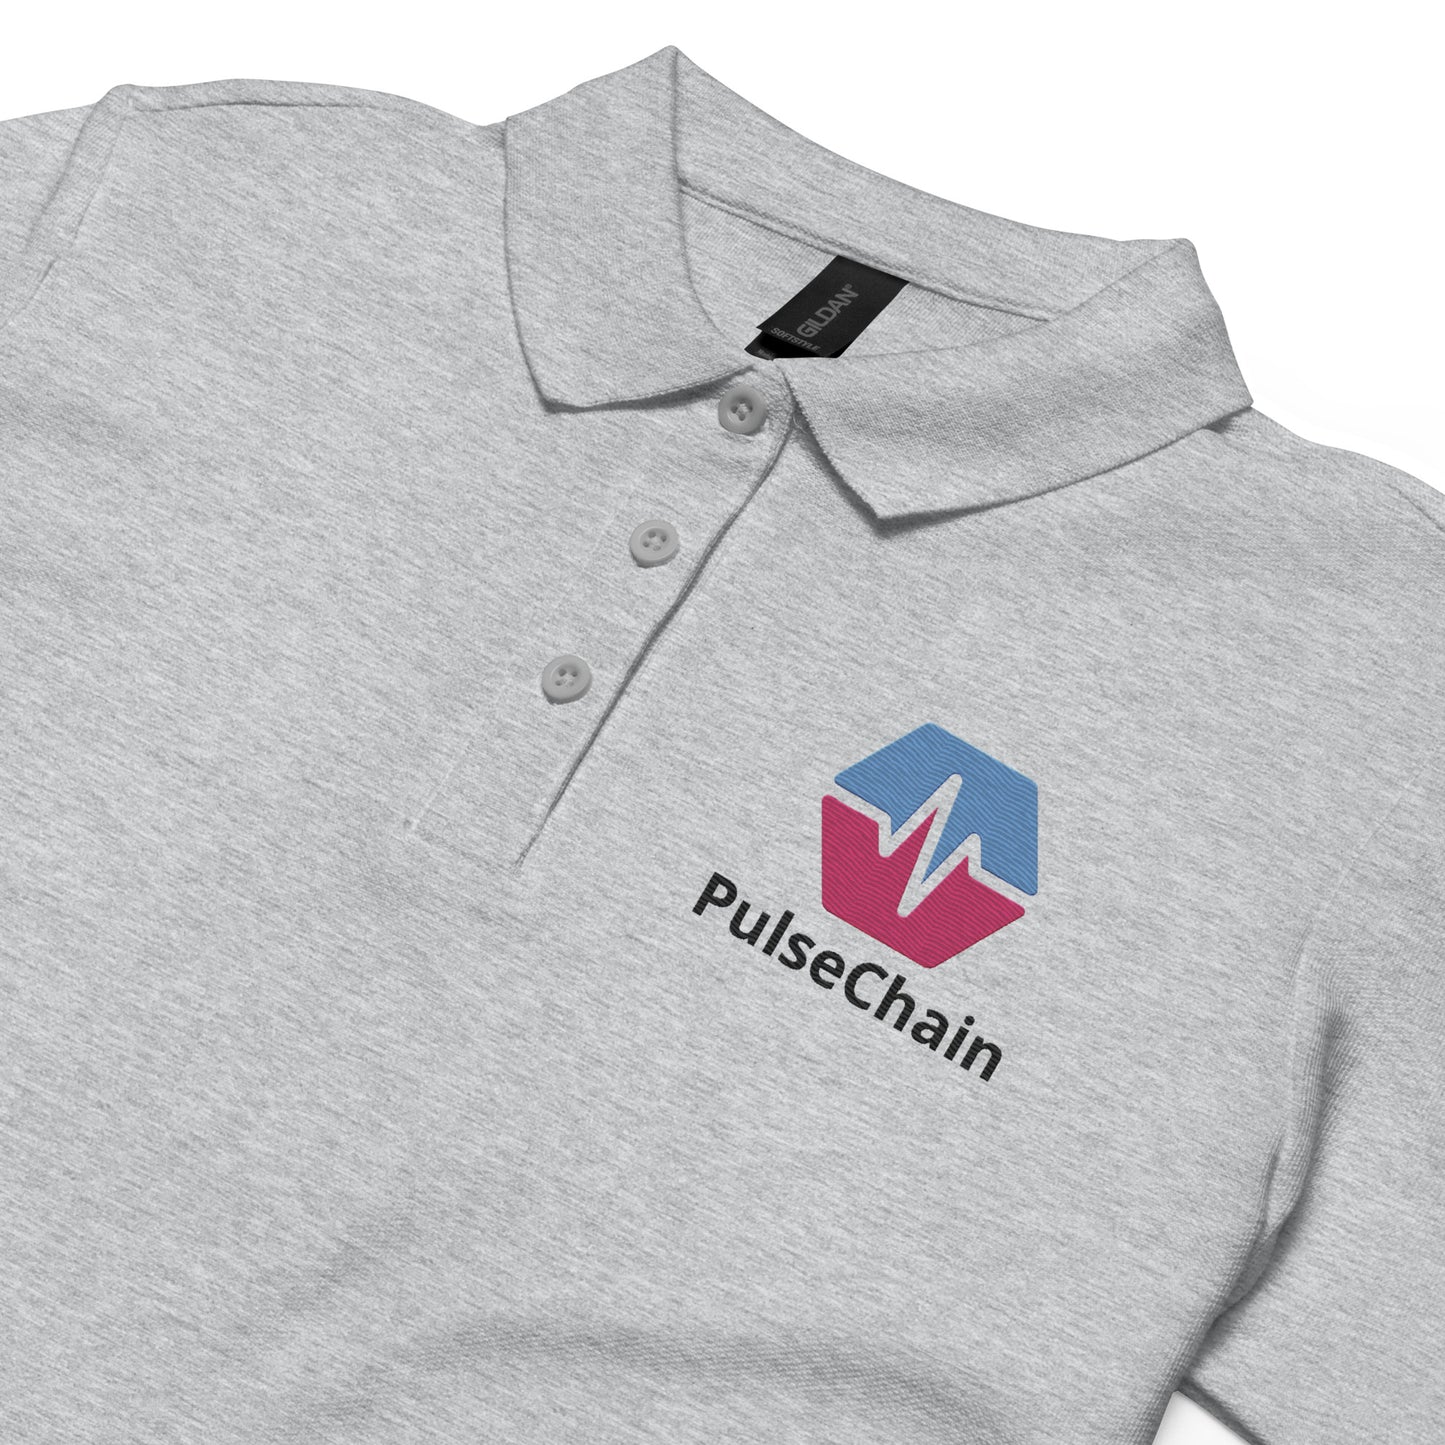 PulseChain Women’s Pique Polo Shirt (Embroidered)